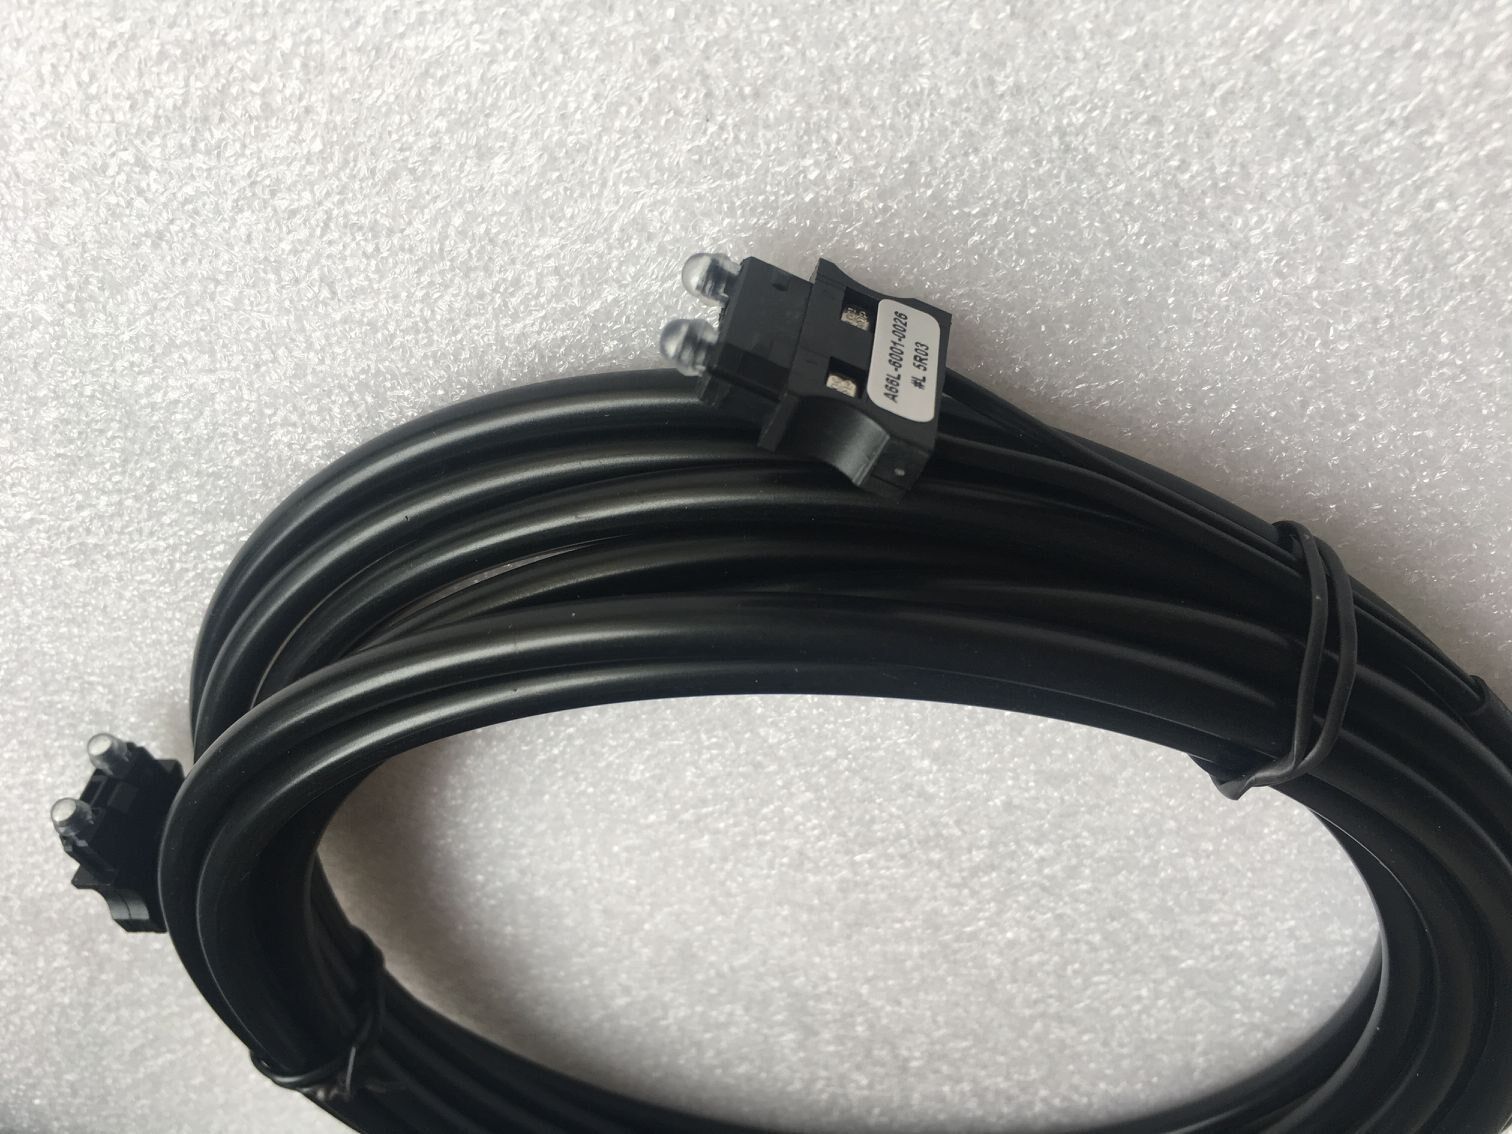 For Fanuc/ 3m 5m 10m 15m 20m Fiber Optic Cable A66l-6001-0023+sheath #h370g Yd